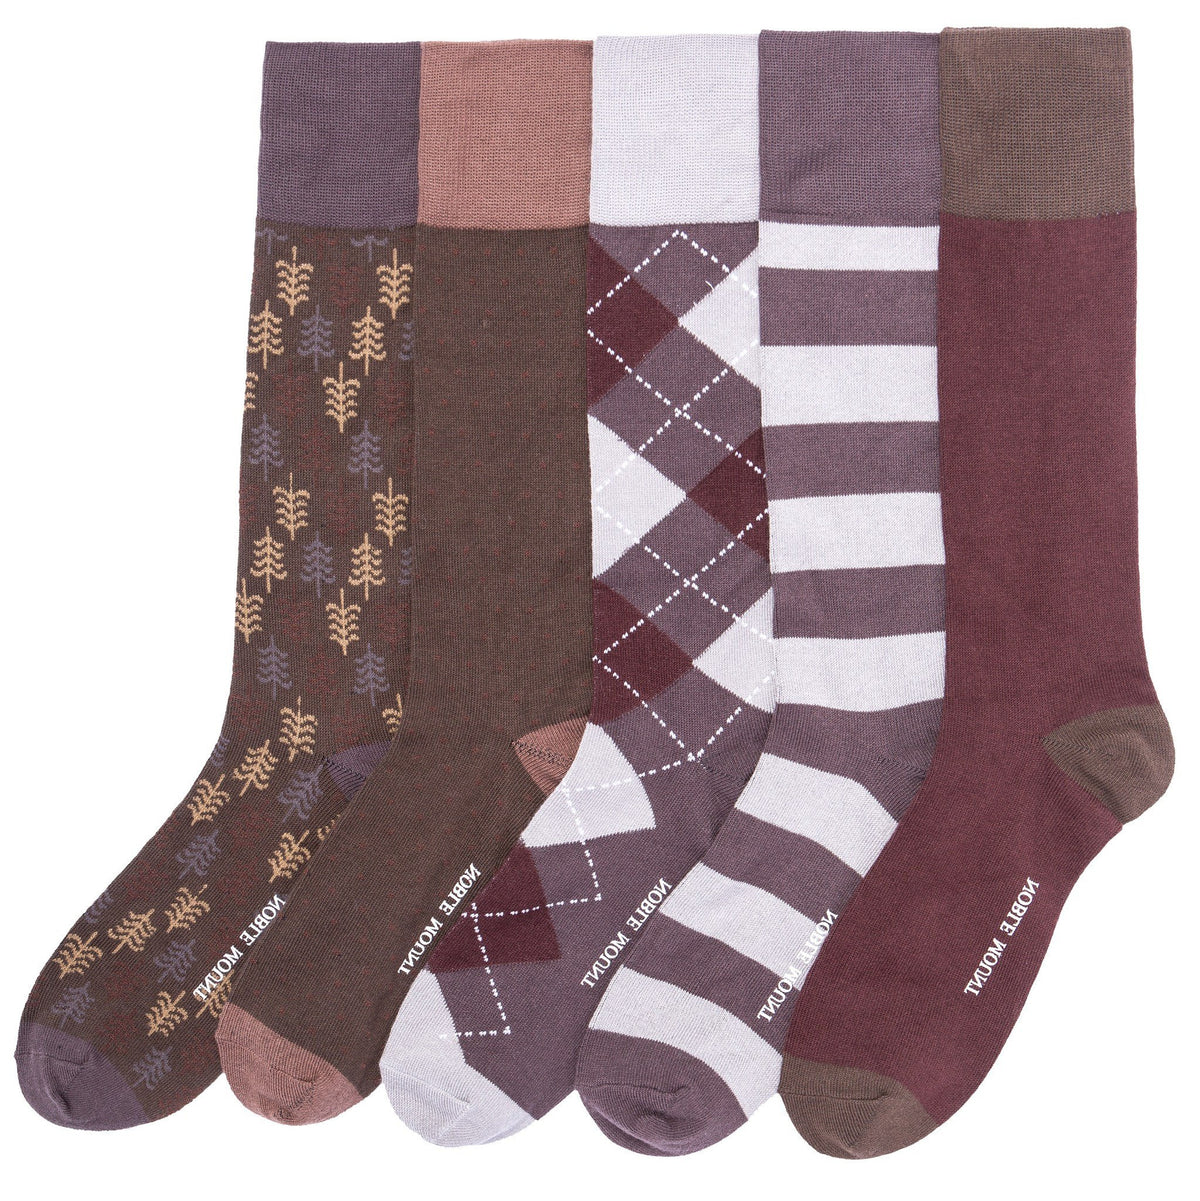 Men's Combed Cotton Weekday Dress Socks 5-Pack - Set A3